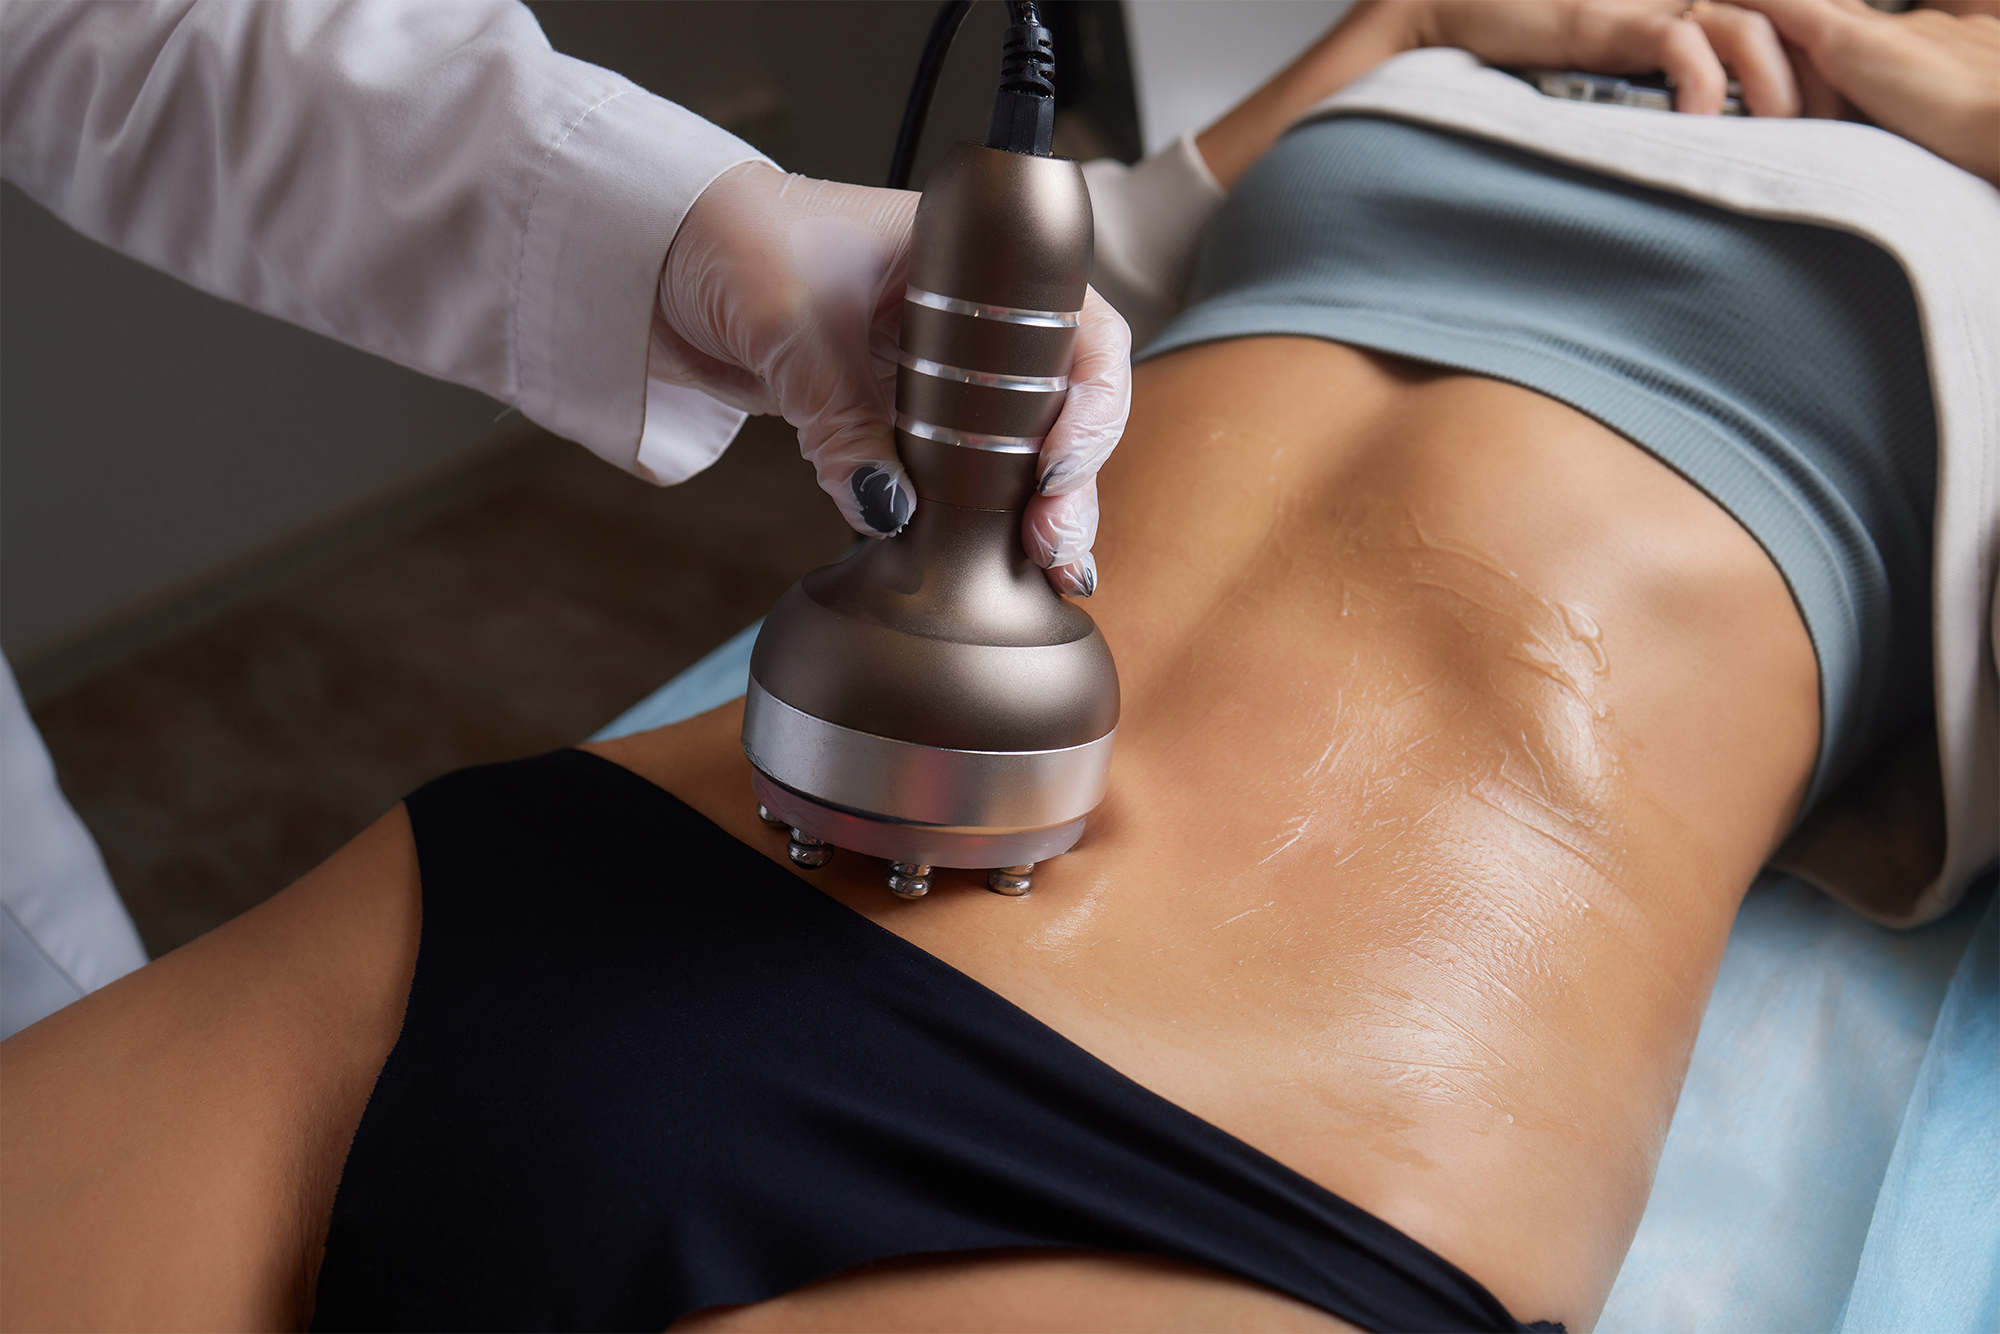 procedure-removing-cellulite-female-abdomen-cavitation-belly-massage-ultrasonic-massage-weigh